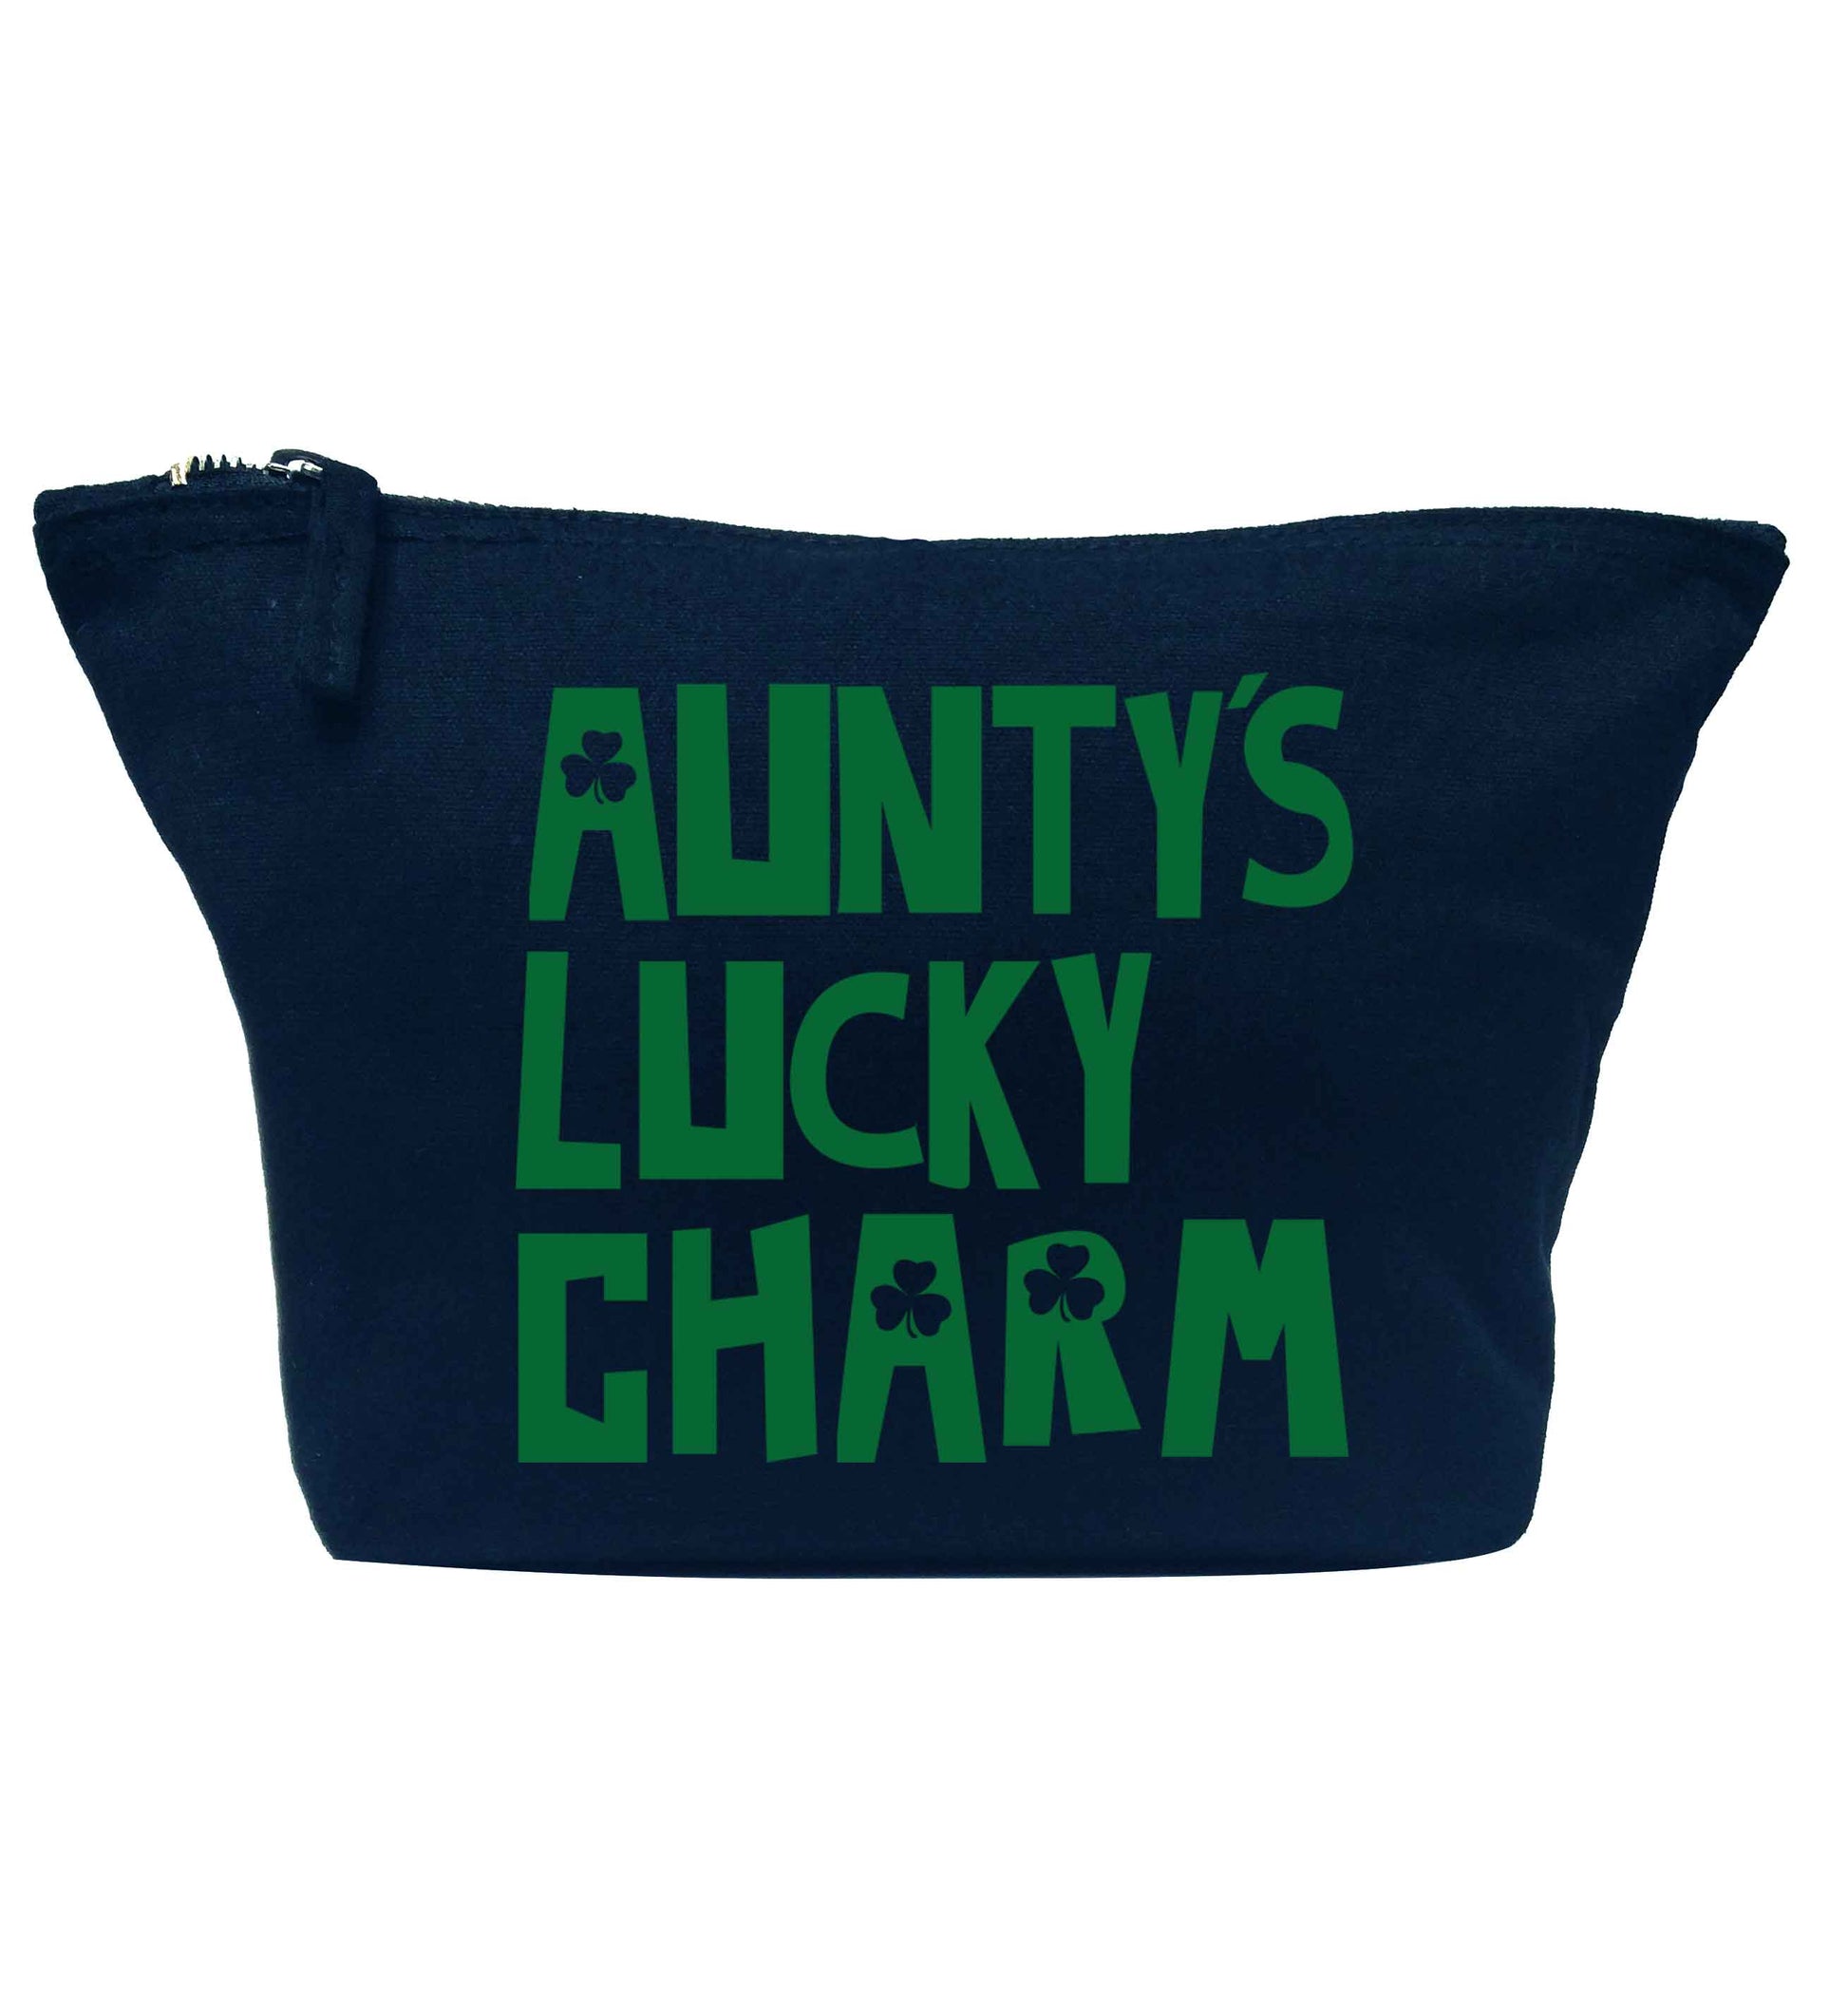 Aunty's lucky charm navy makeup bag